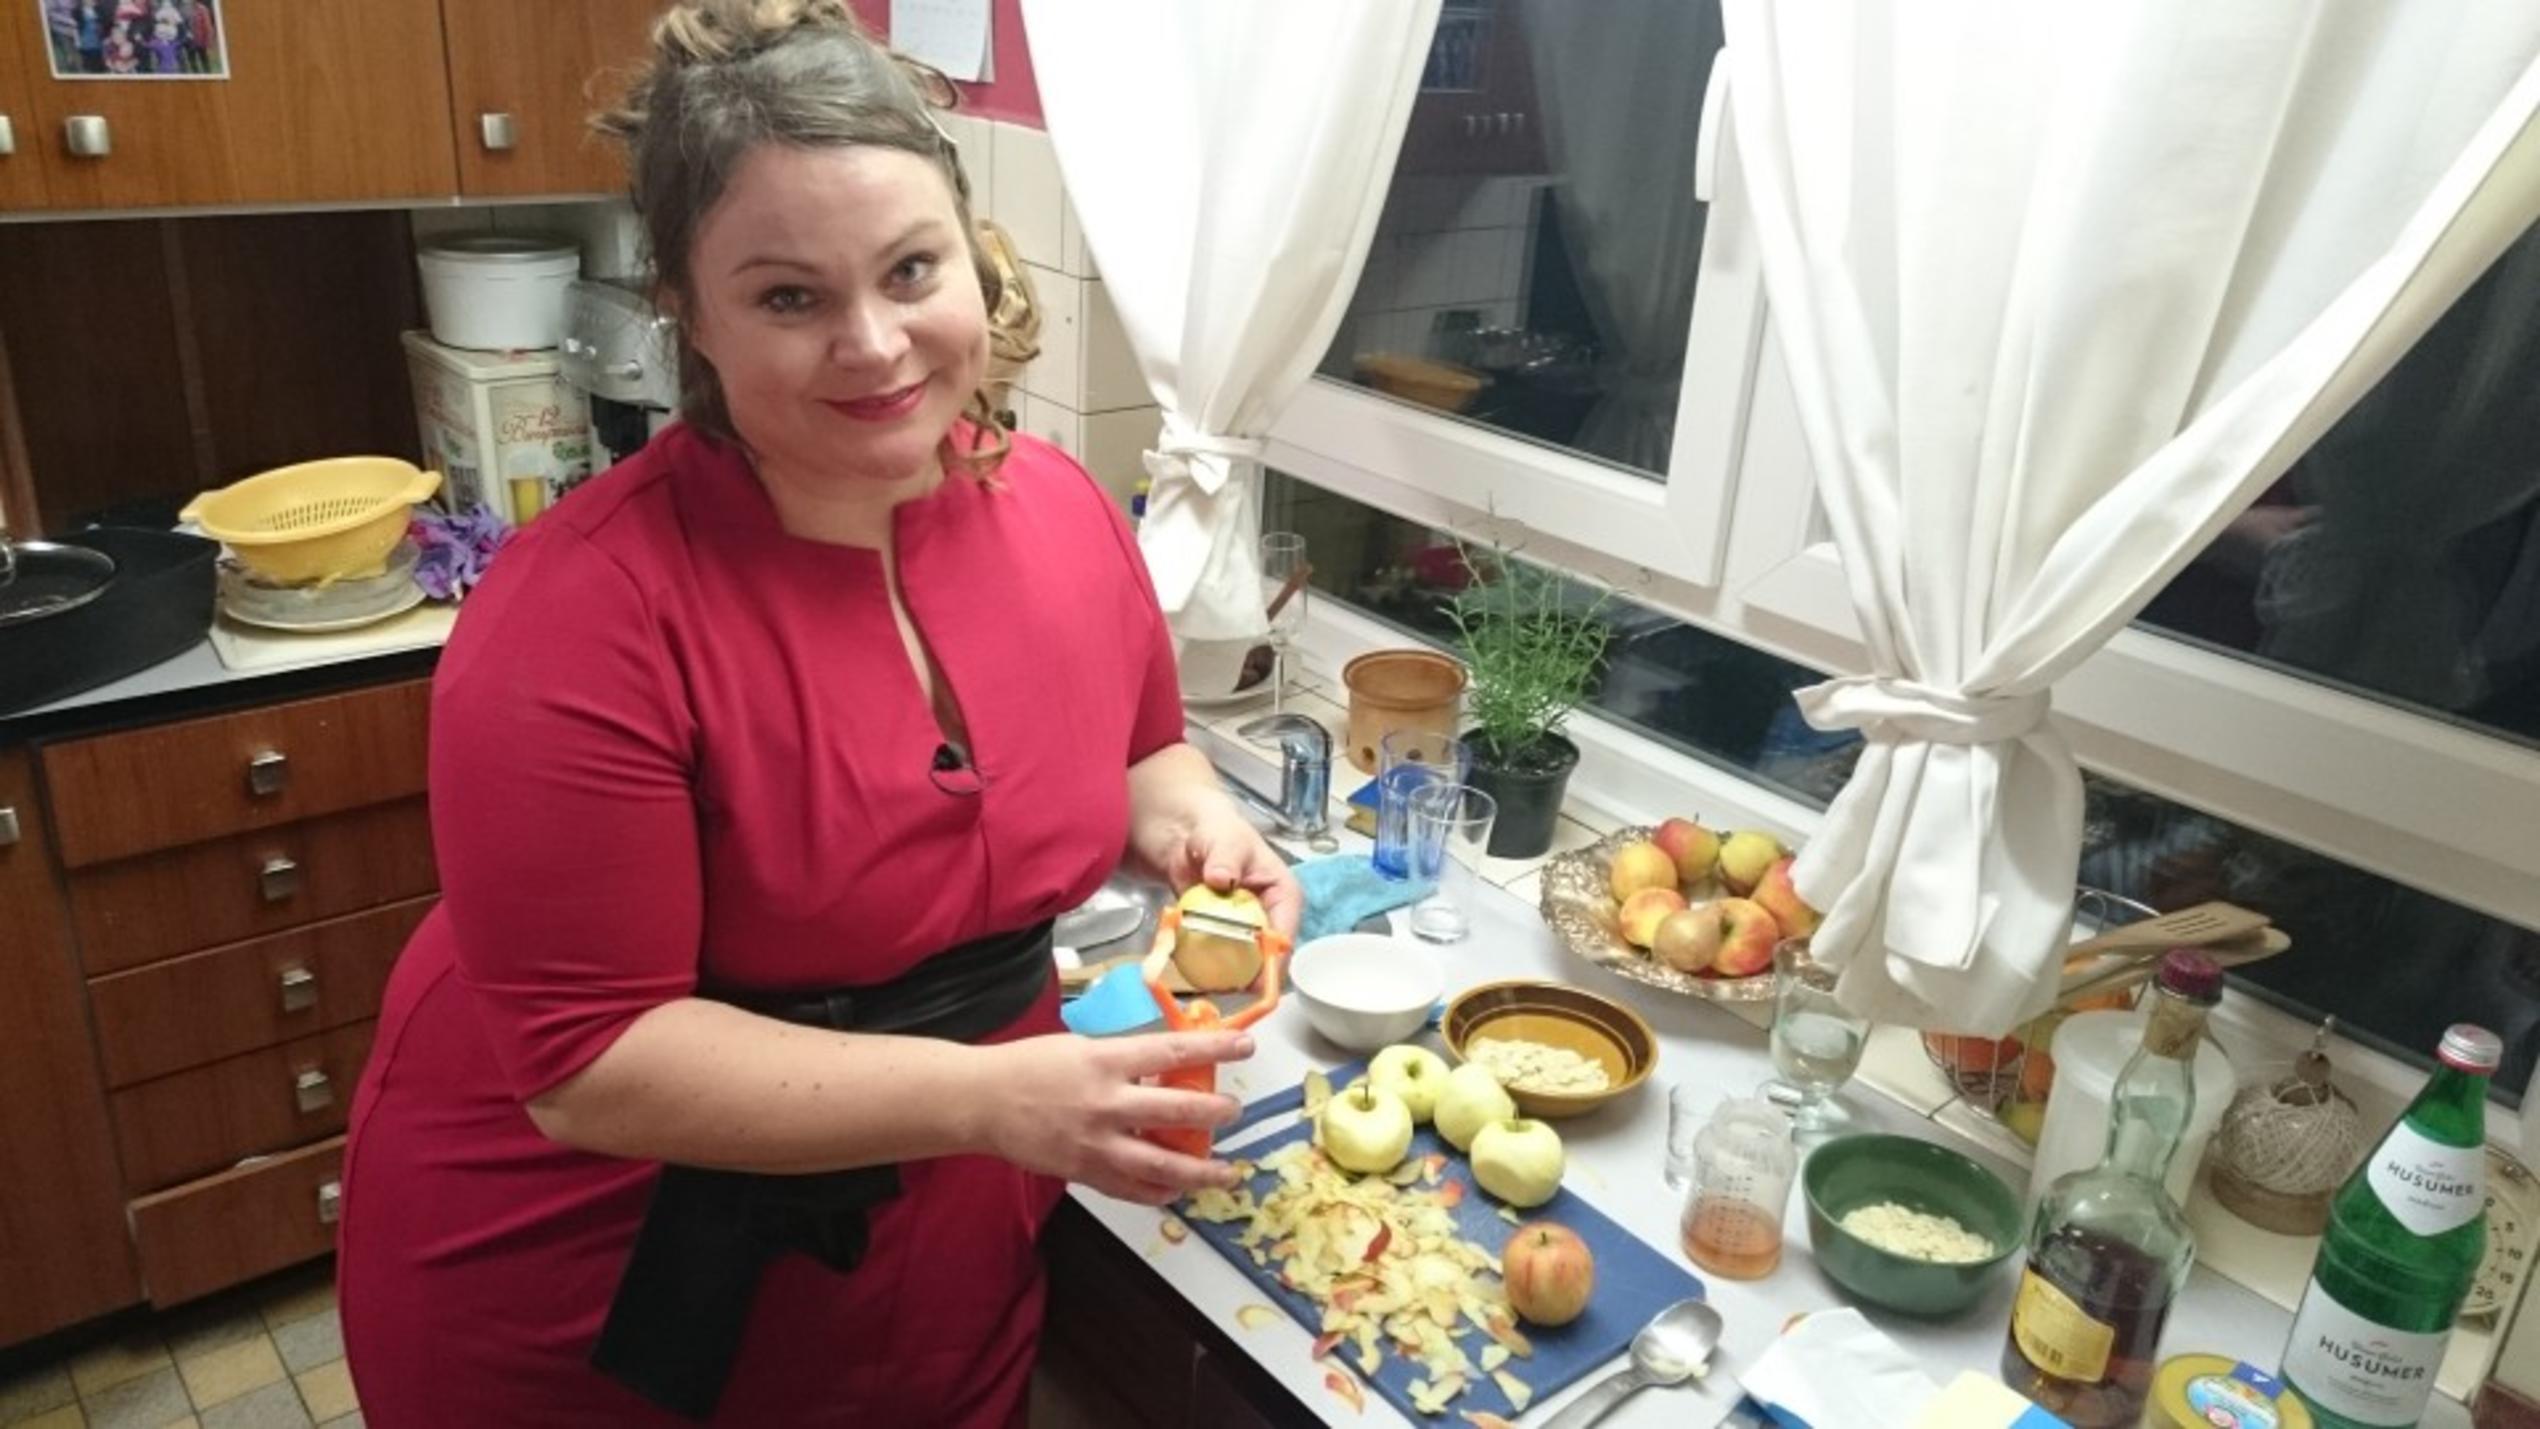 Kandidatin Eva kocht an Tag 4 bei "Das perfekte Dinner" in Kiel